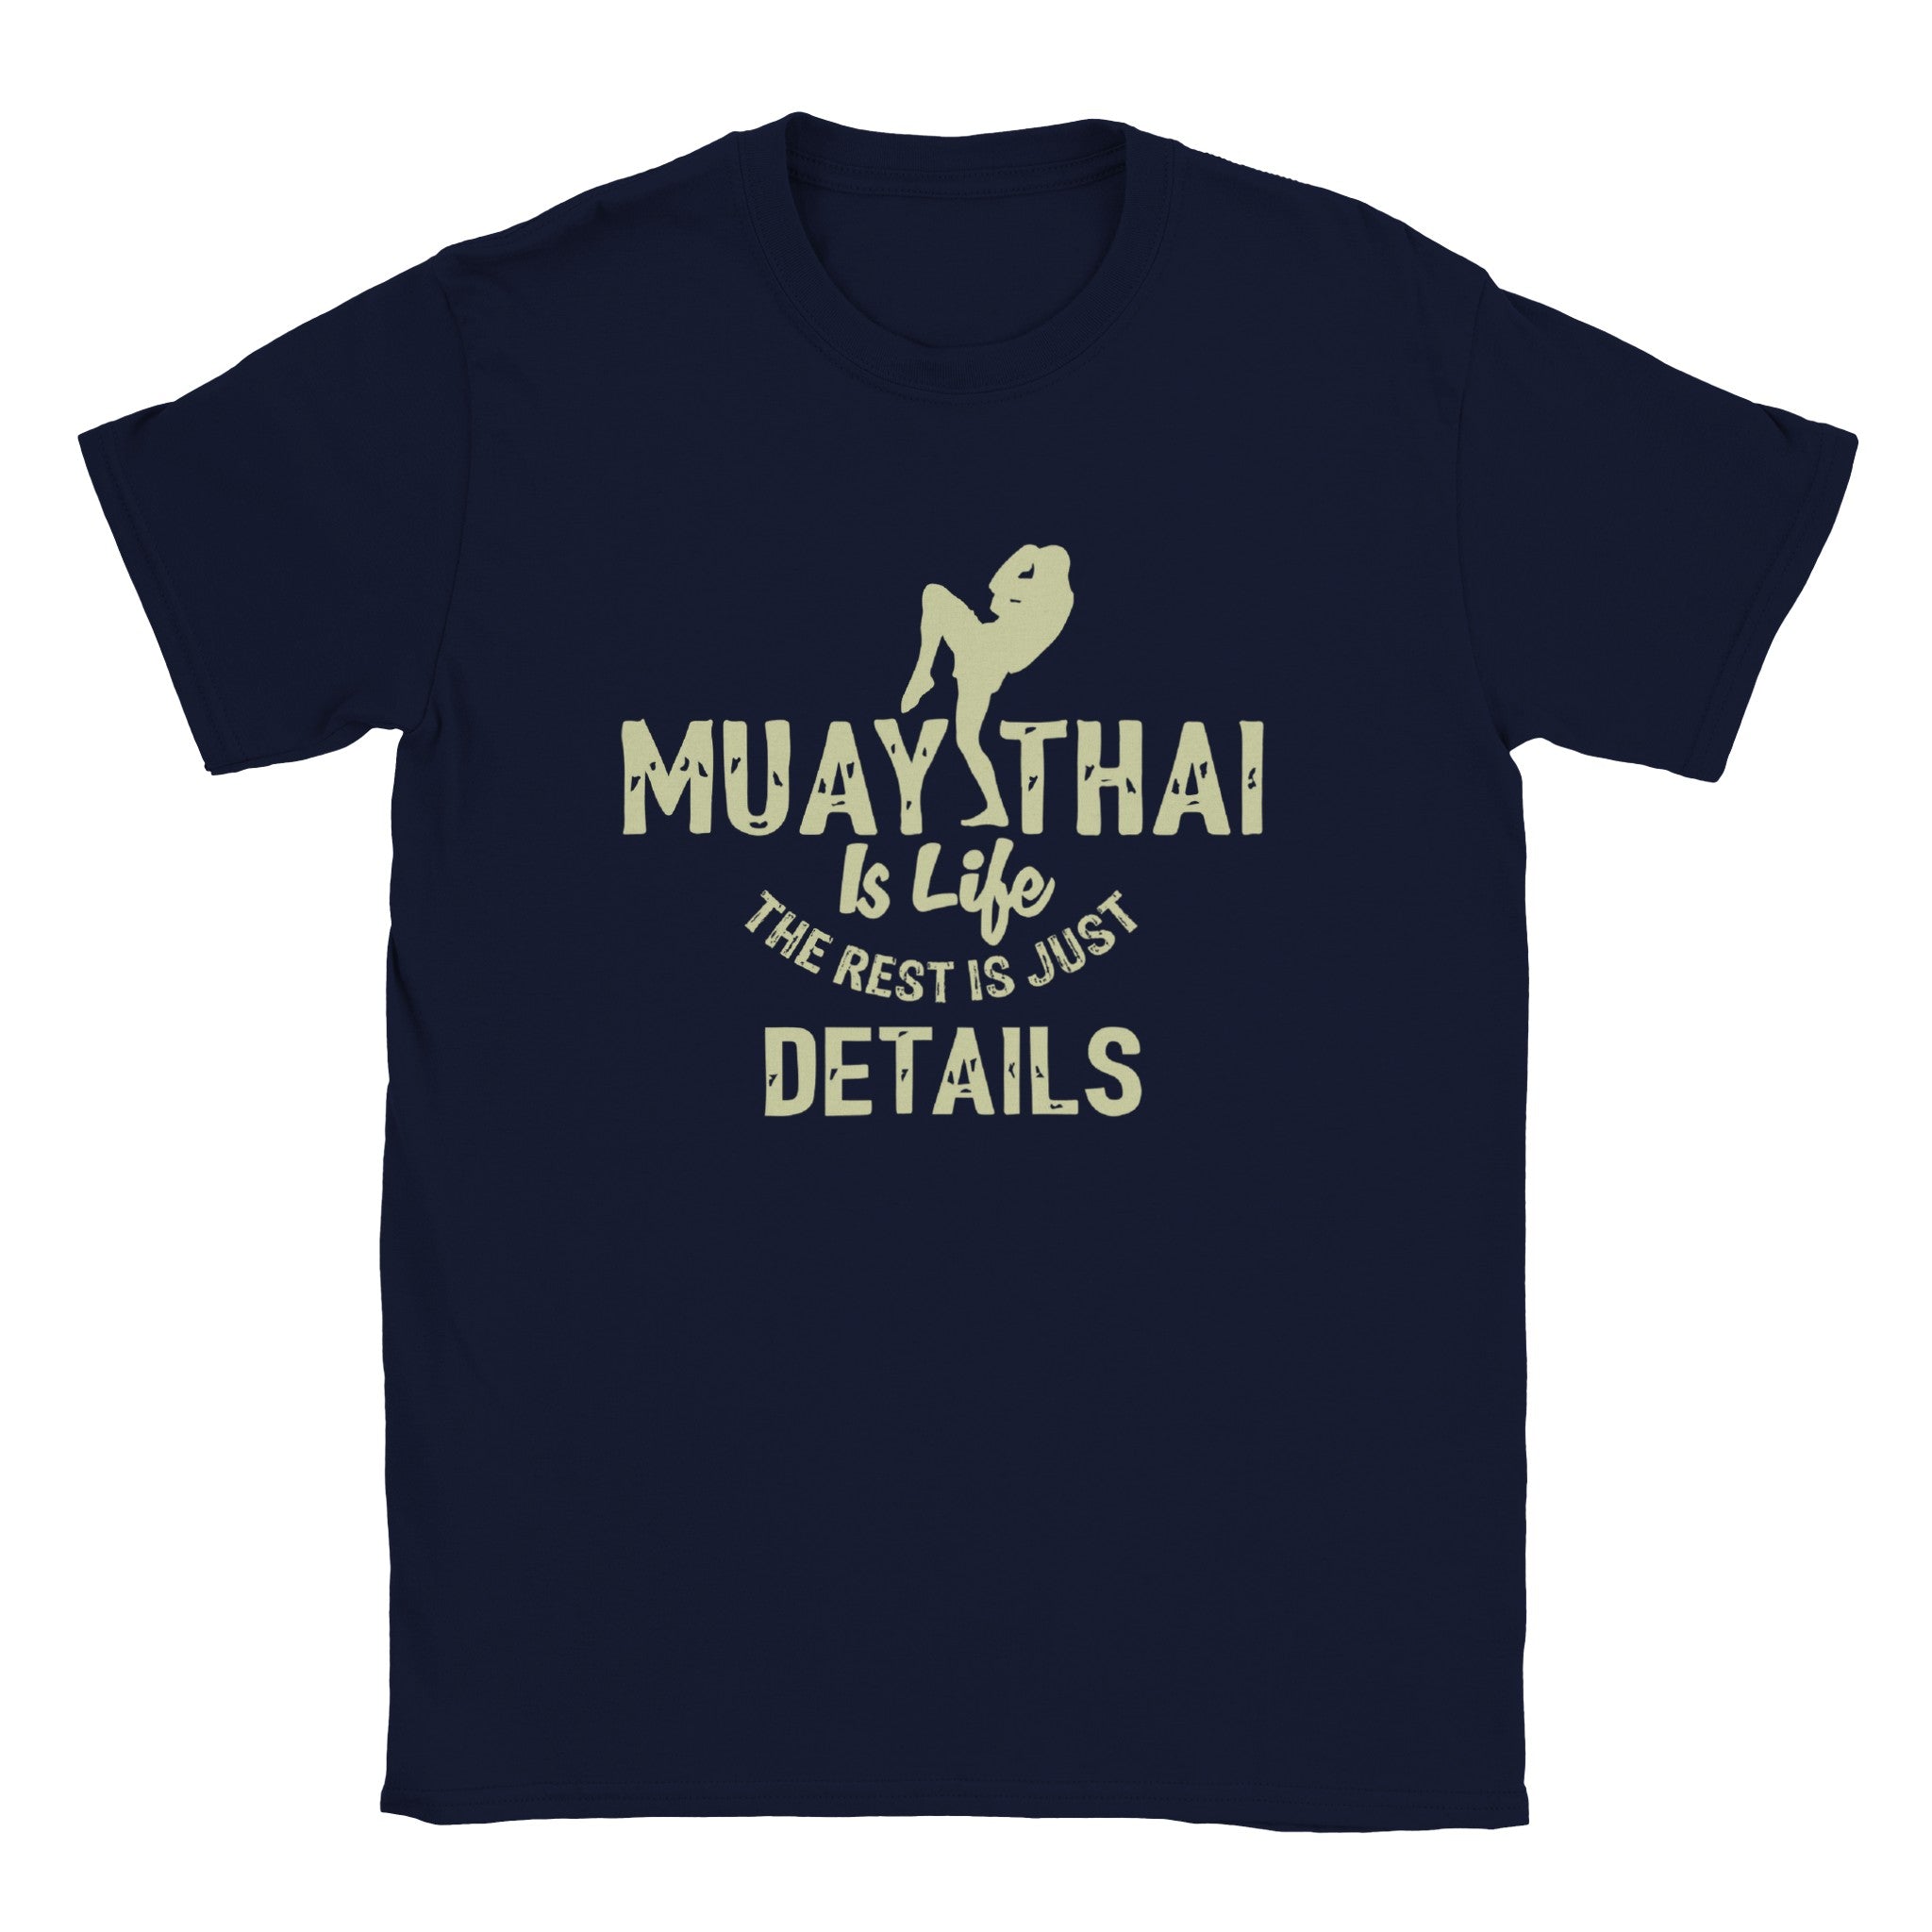 Muay Thai is Life T-shirt